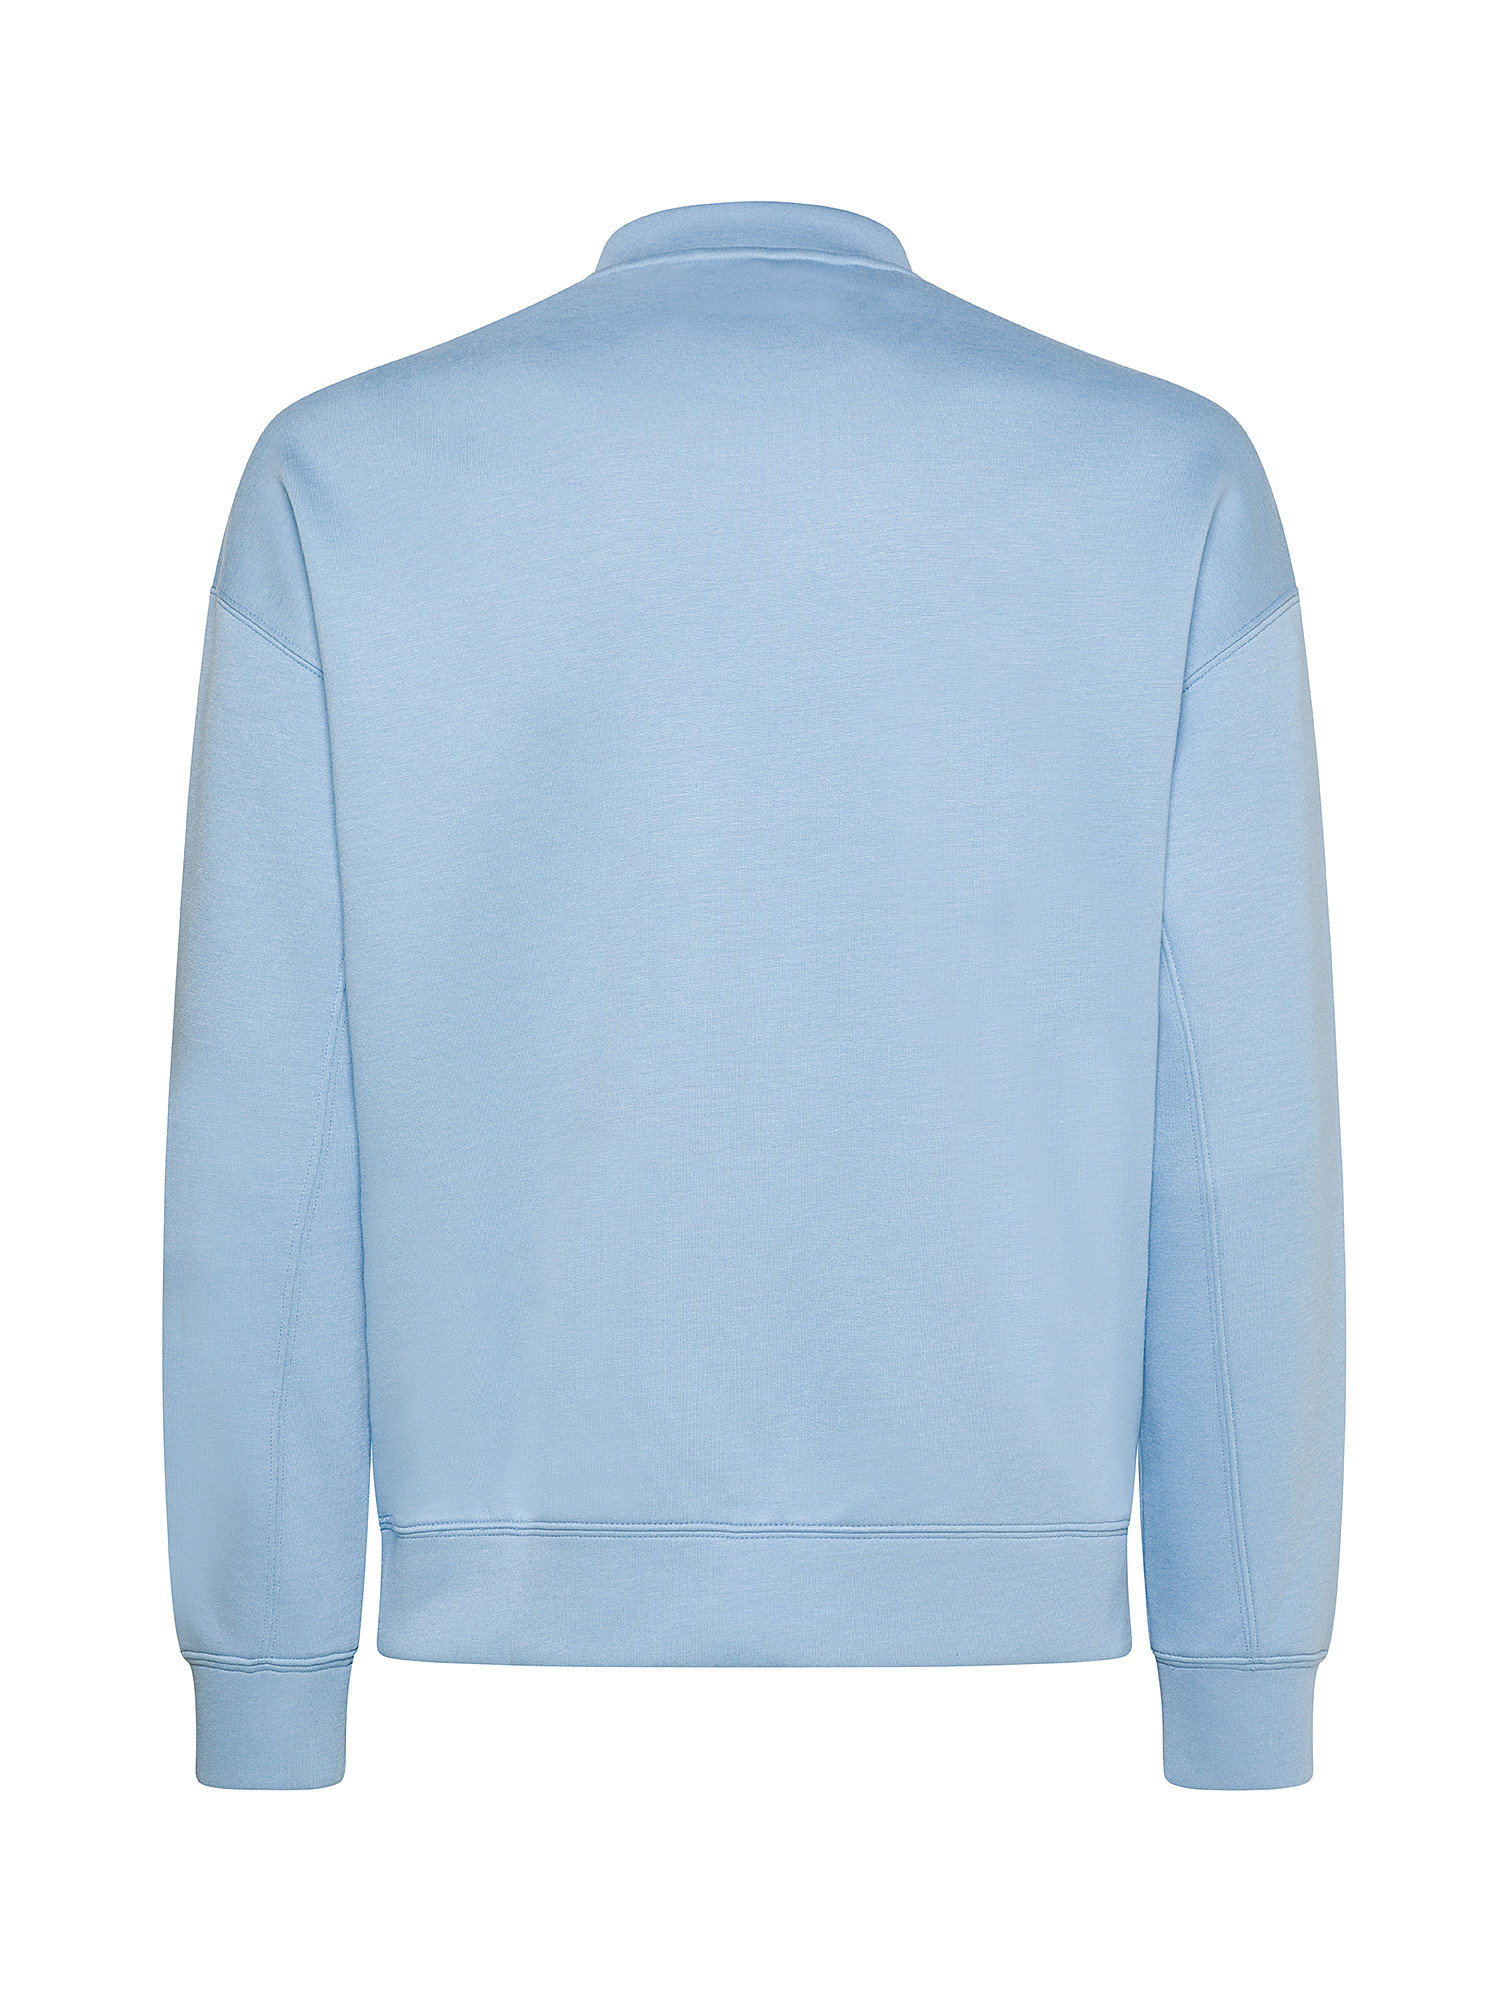 Emporio Armani - Sweatshirt with logo, Light Blue, large image number 1